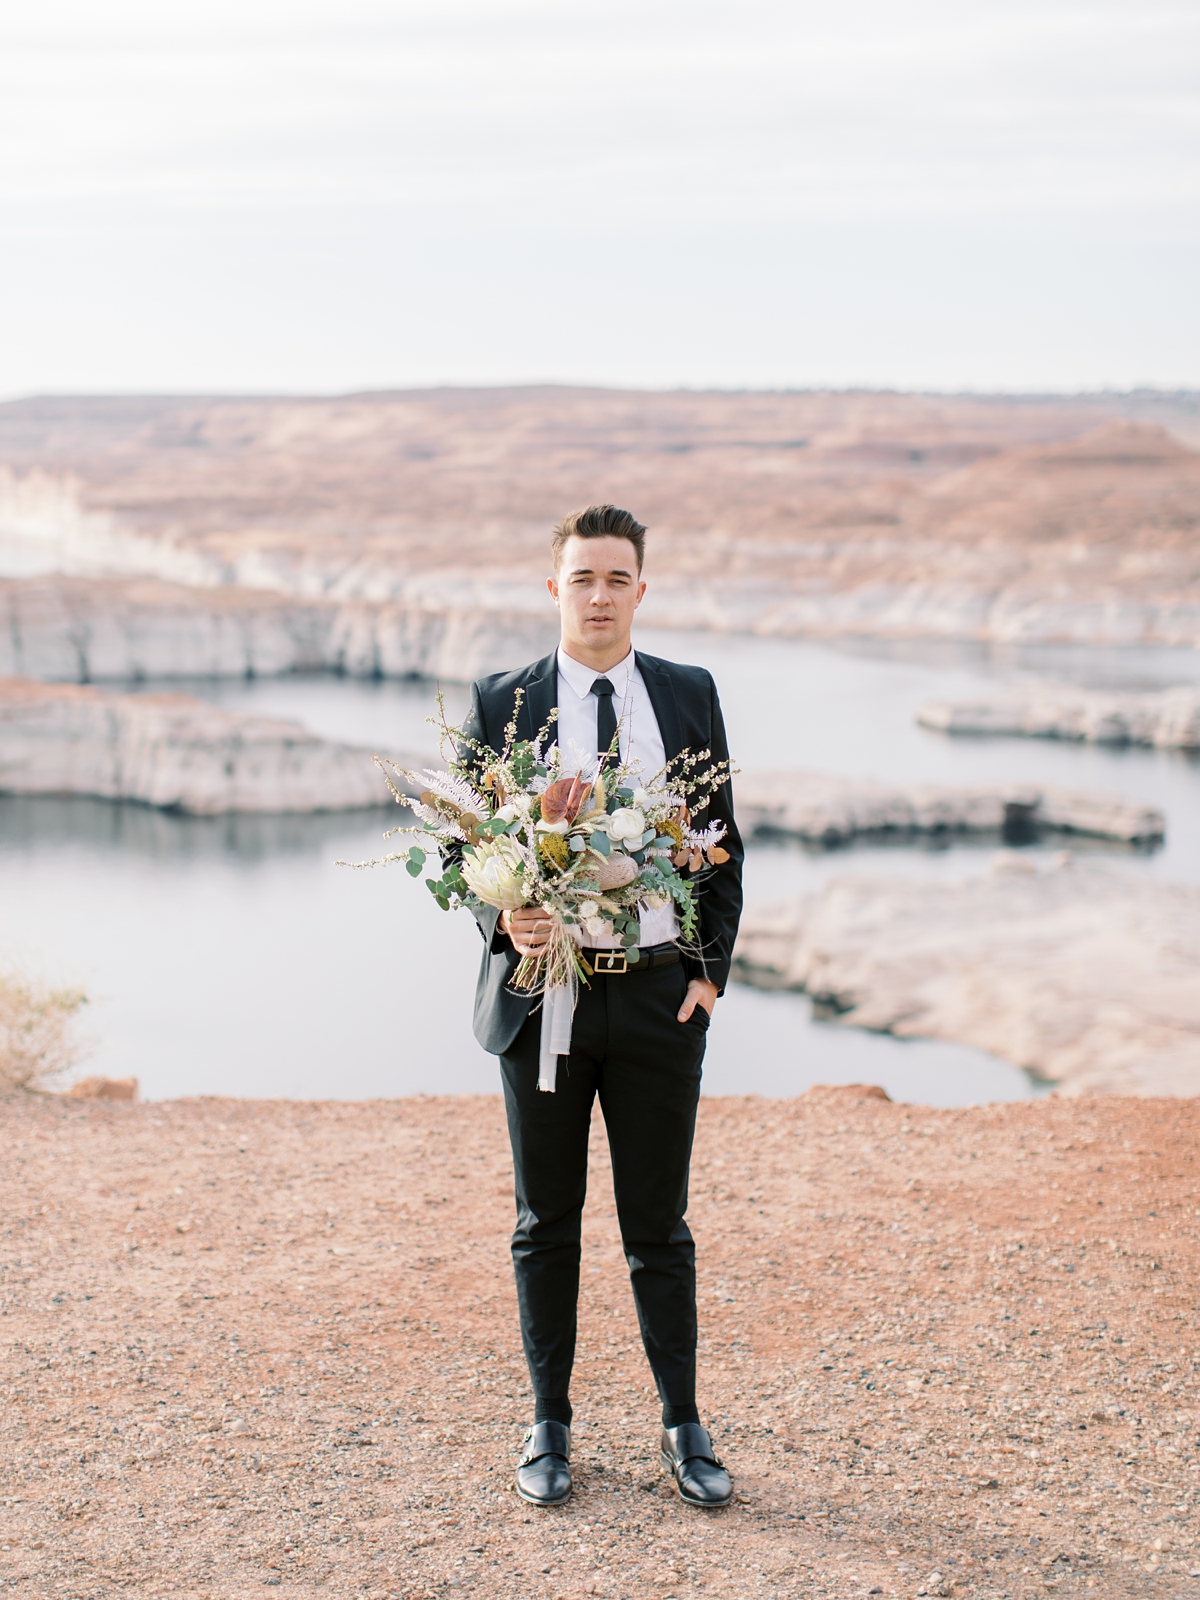 Lake Powell Elopement Editorial - San Diego Wedding Photographer